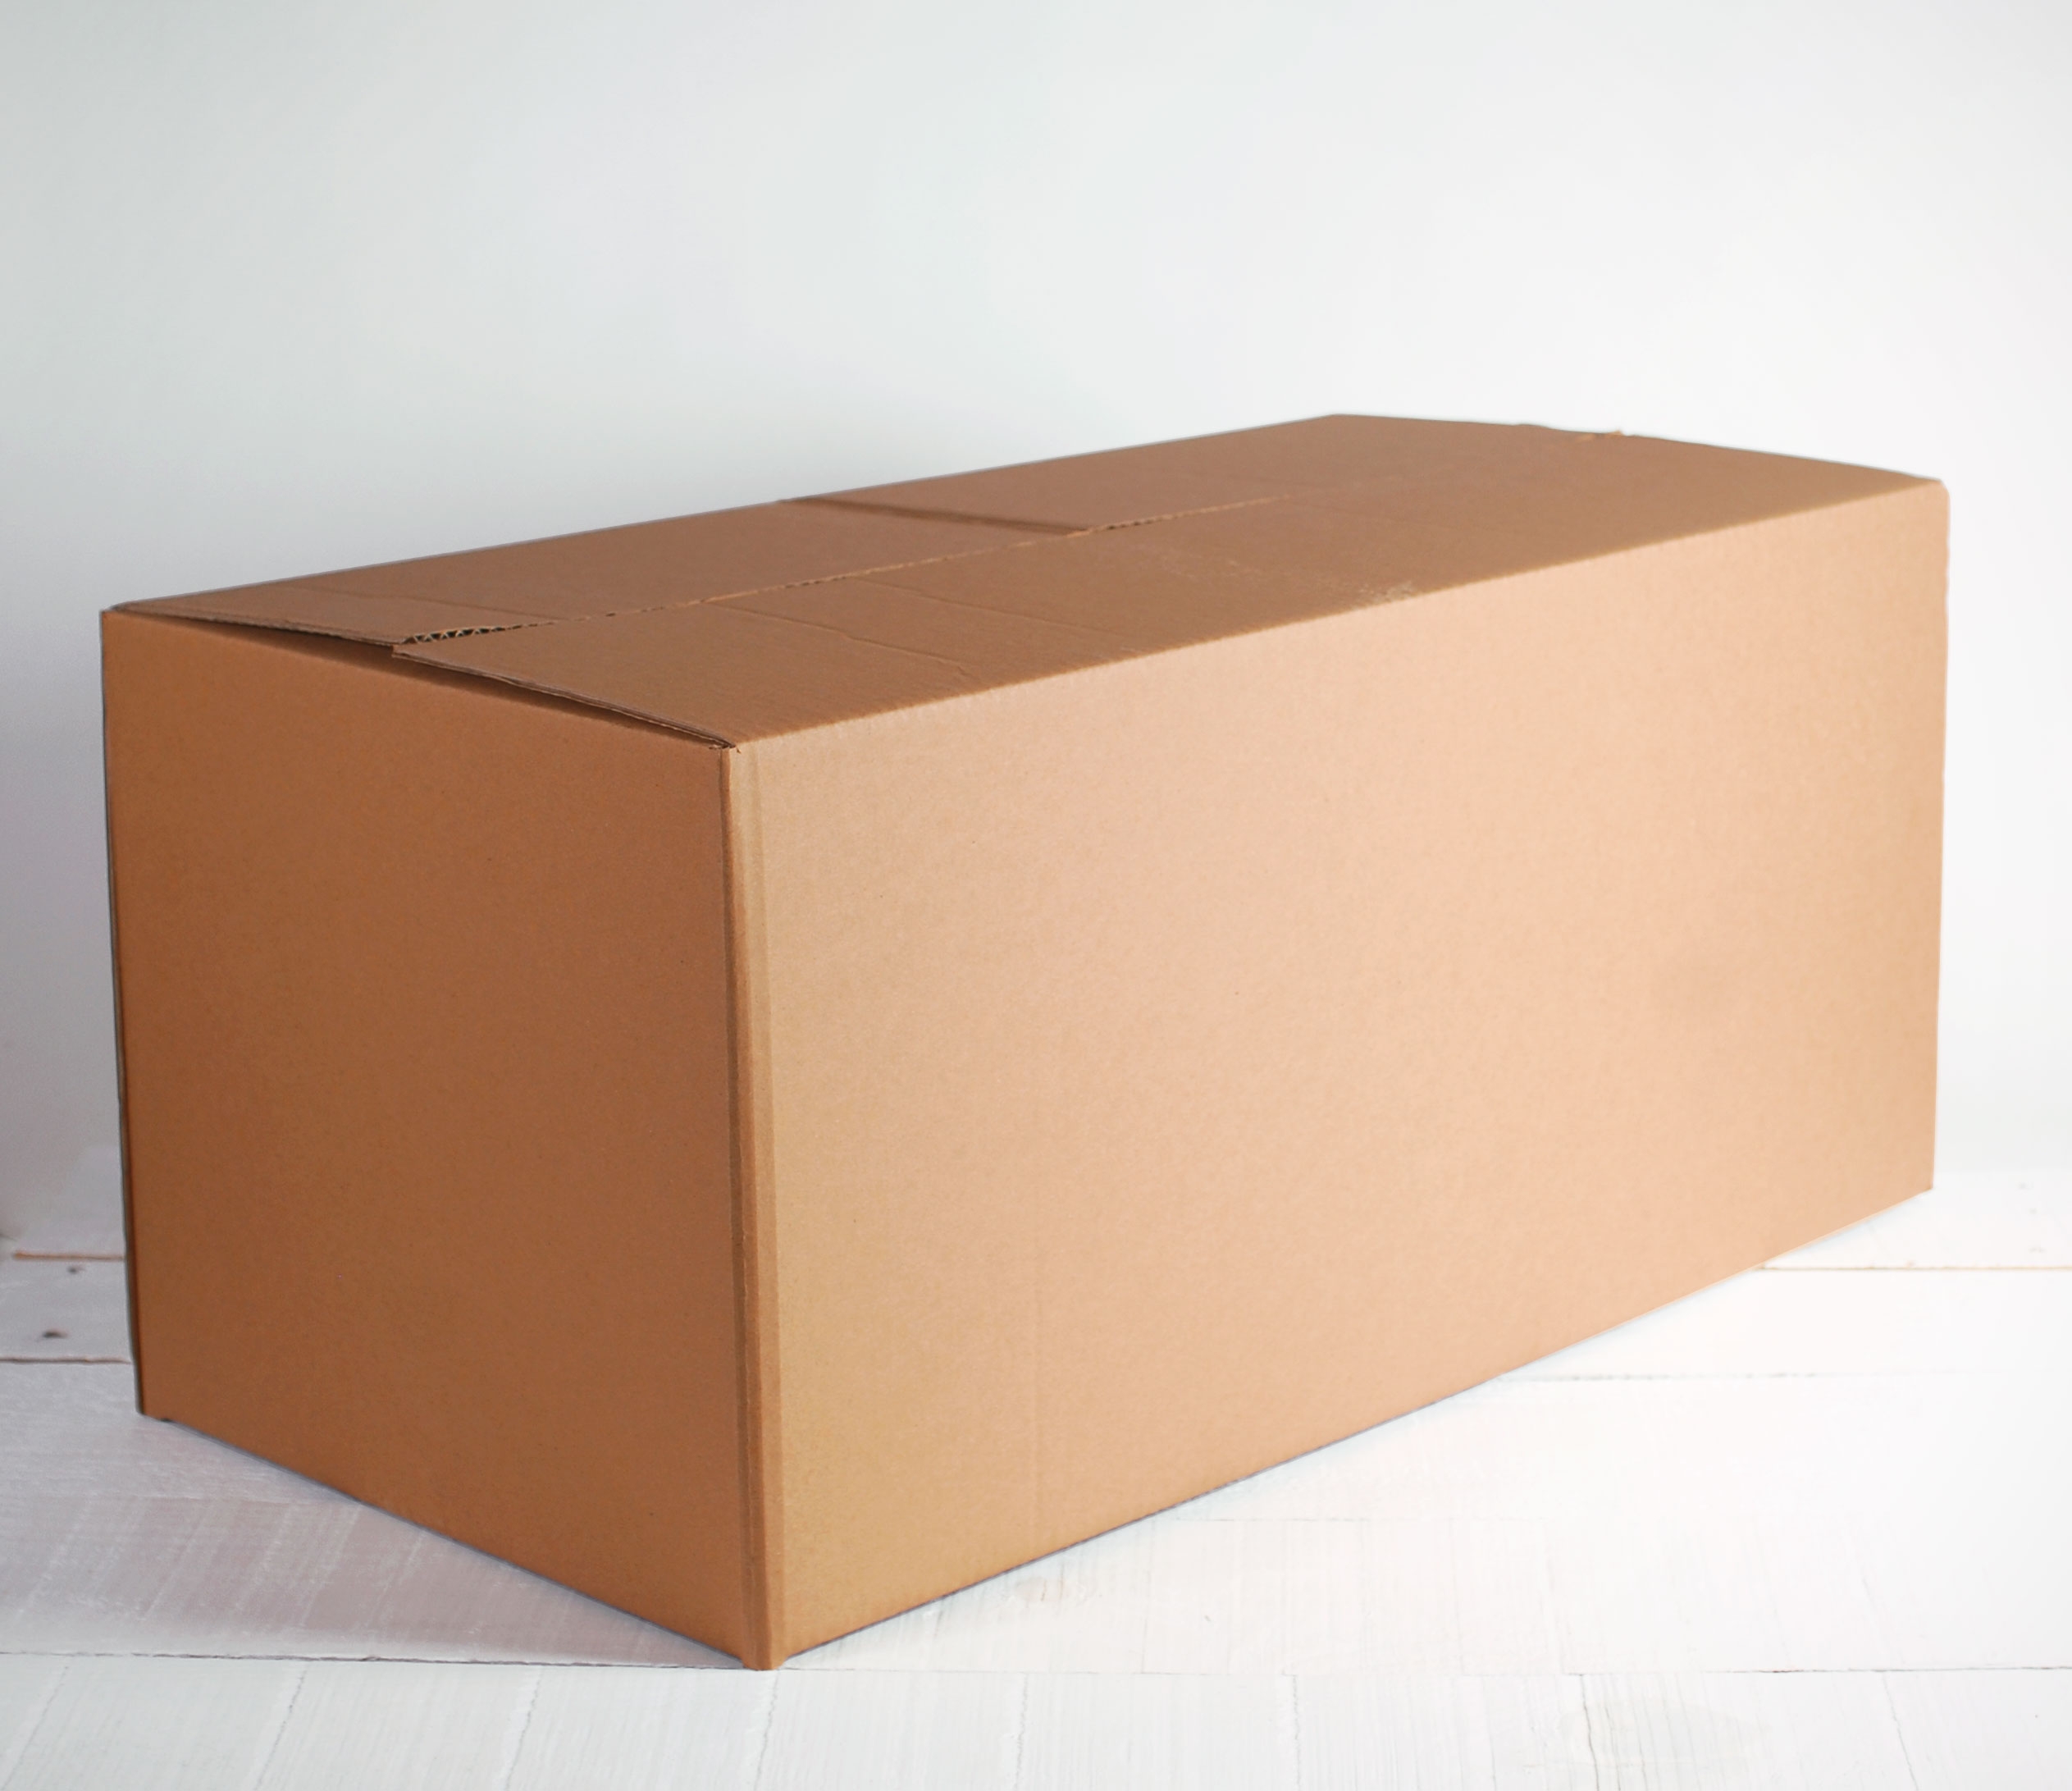 XXL Cardboard Box for Removals